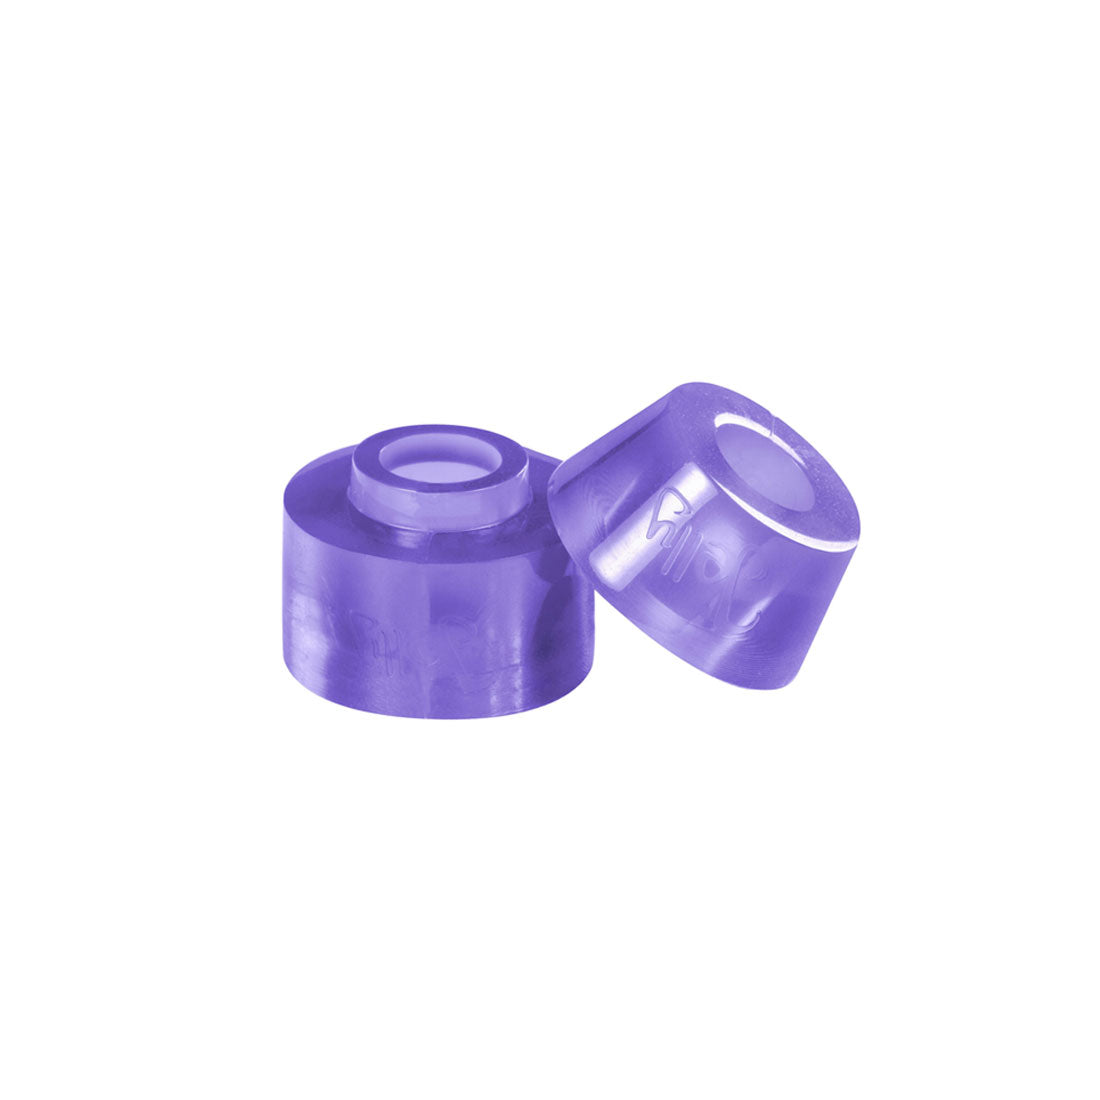 Chaya Jelly Interlock Cushions 80a 8pk - Purple Roller Skate Hardware and Parts